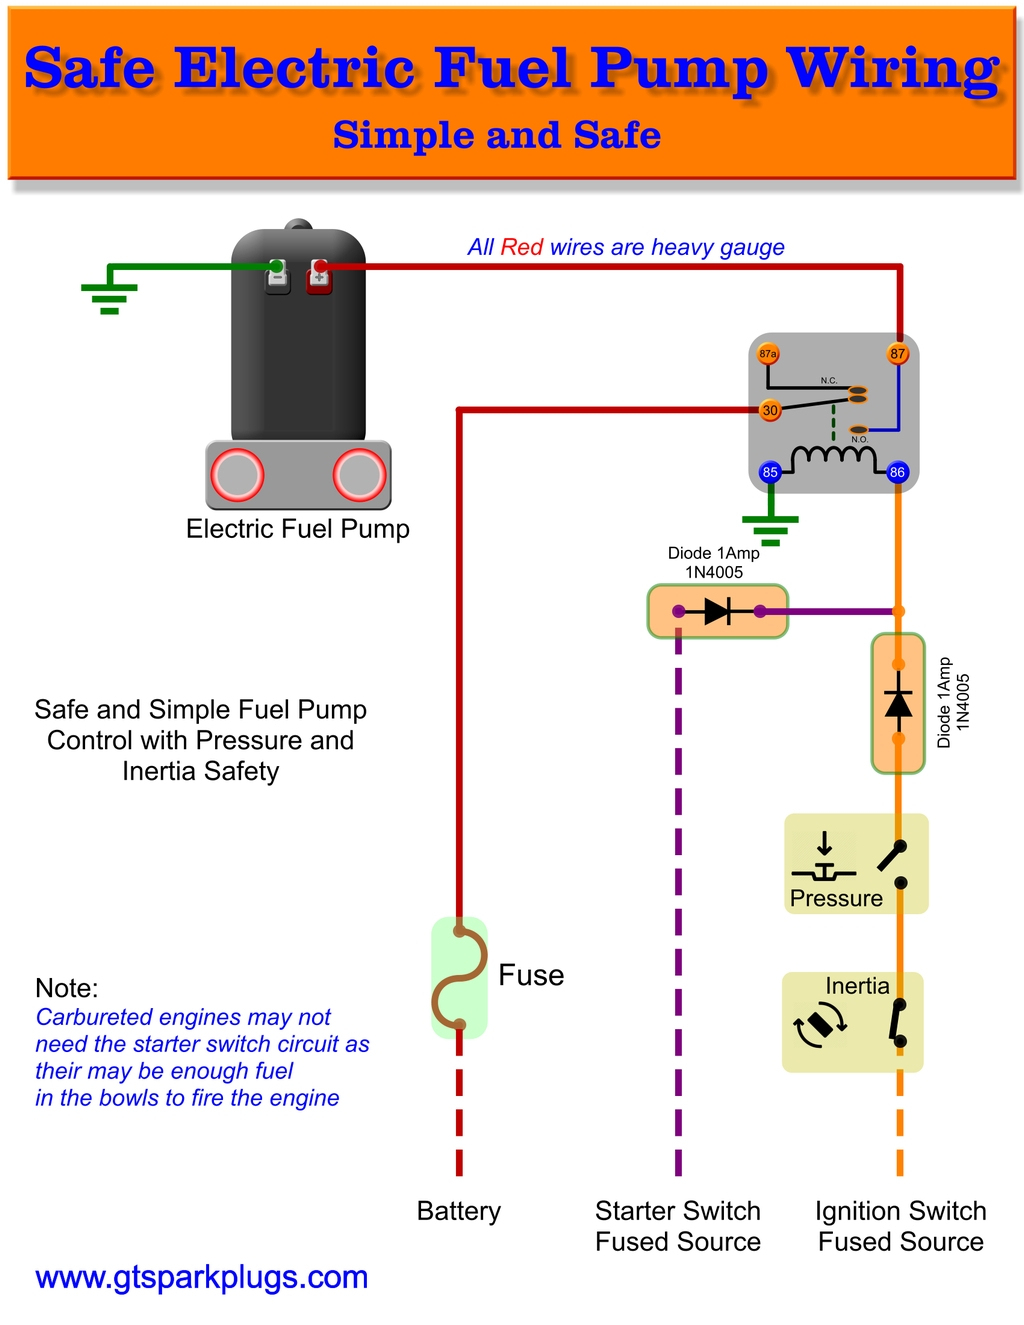 Universal Electric Fuel Pump Wiring Schematic | Wiring Diagram - Universal Fuel Gauge Wiring Diagram